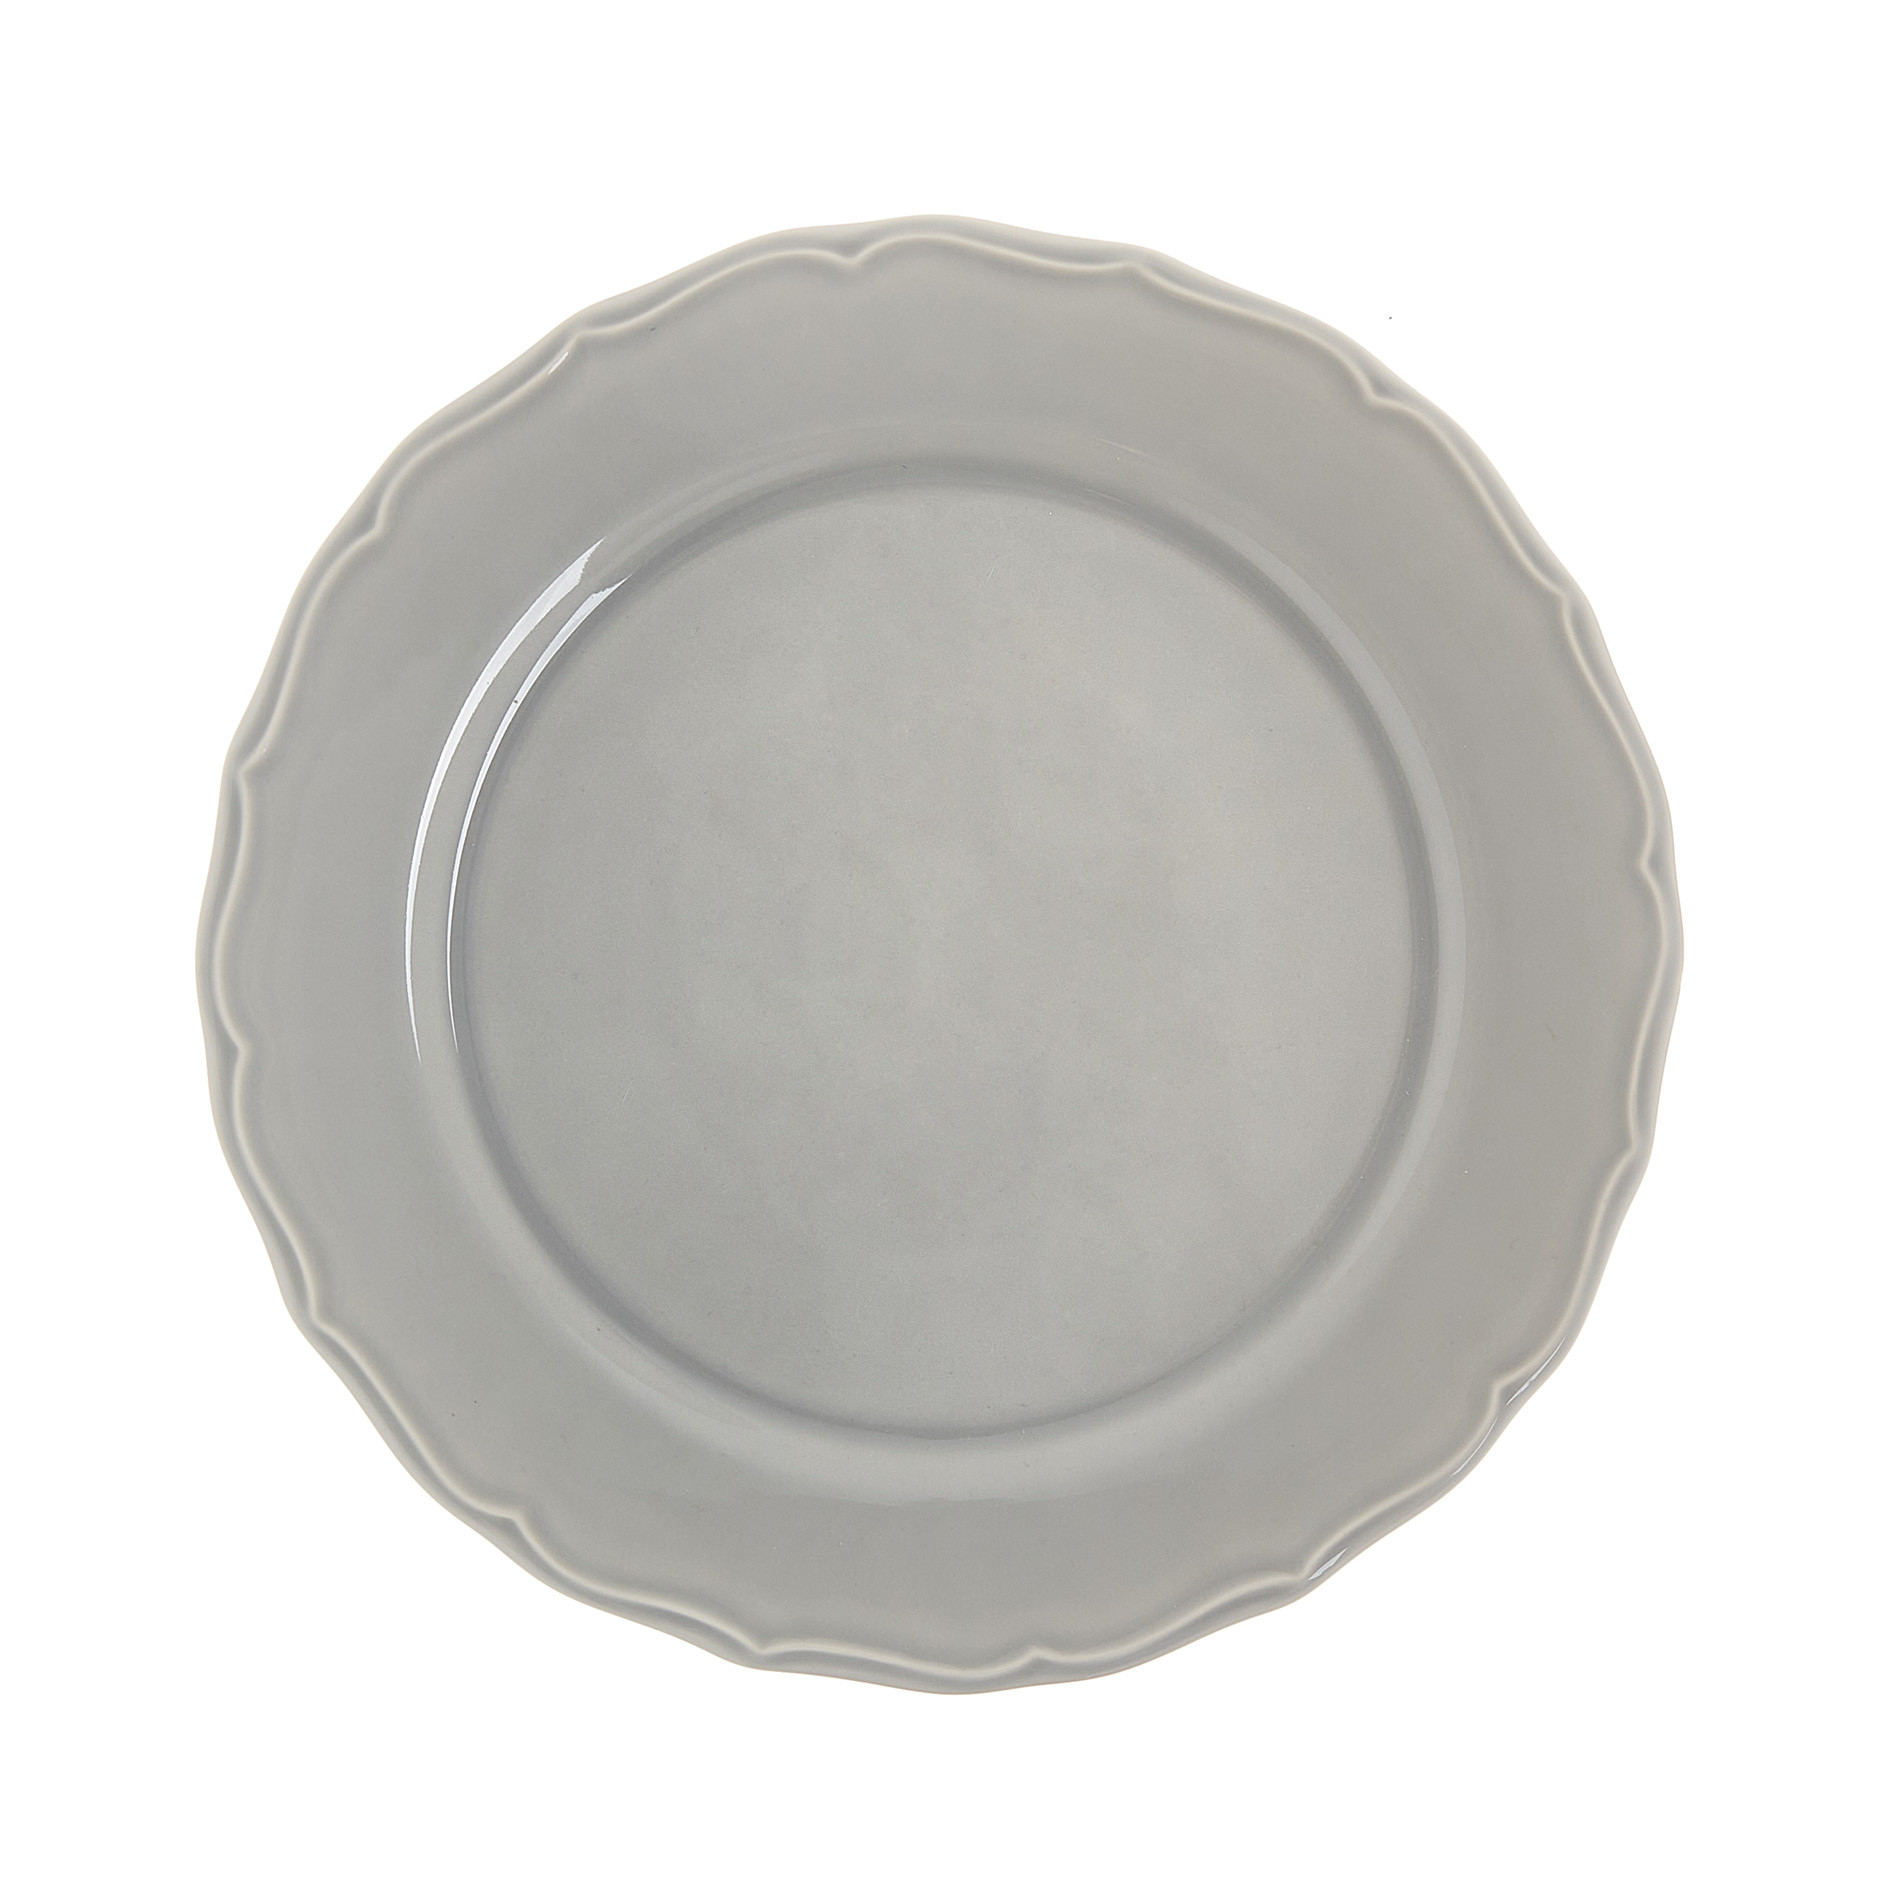 Dona Maria ceramic serving dish, Grey, large image number 0